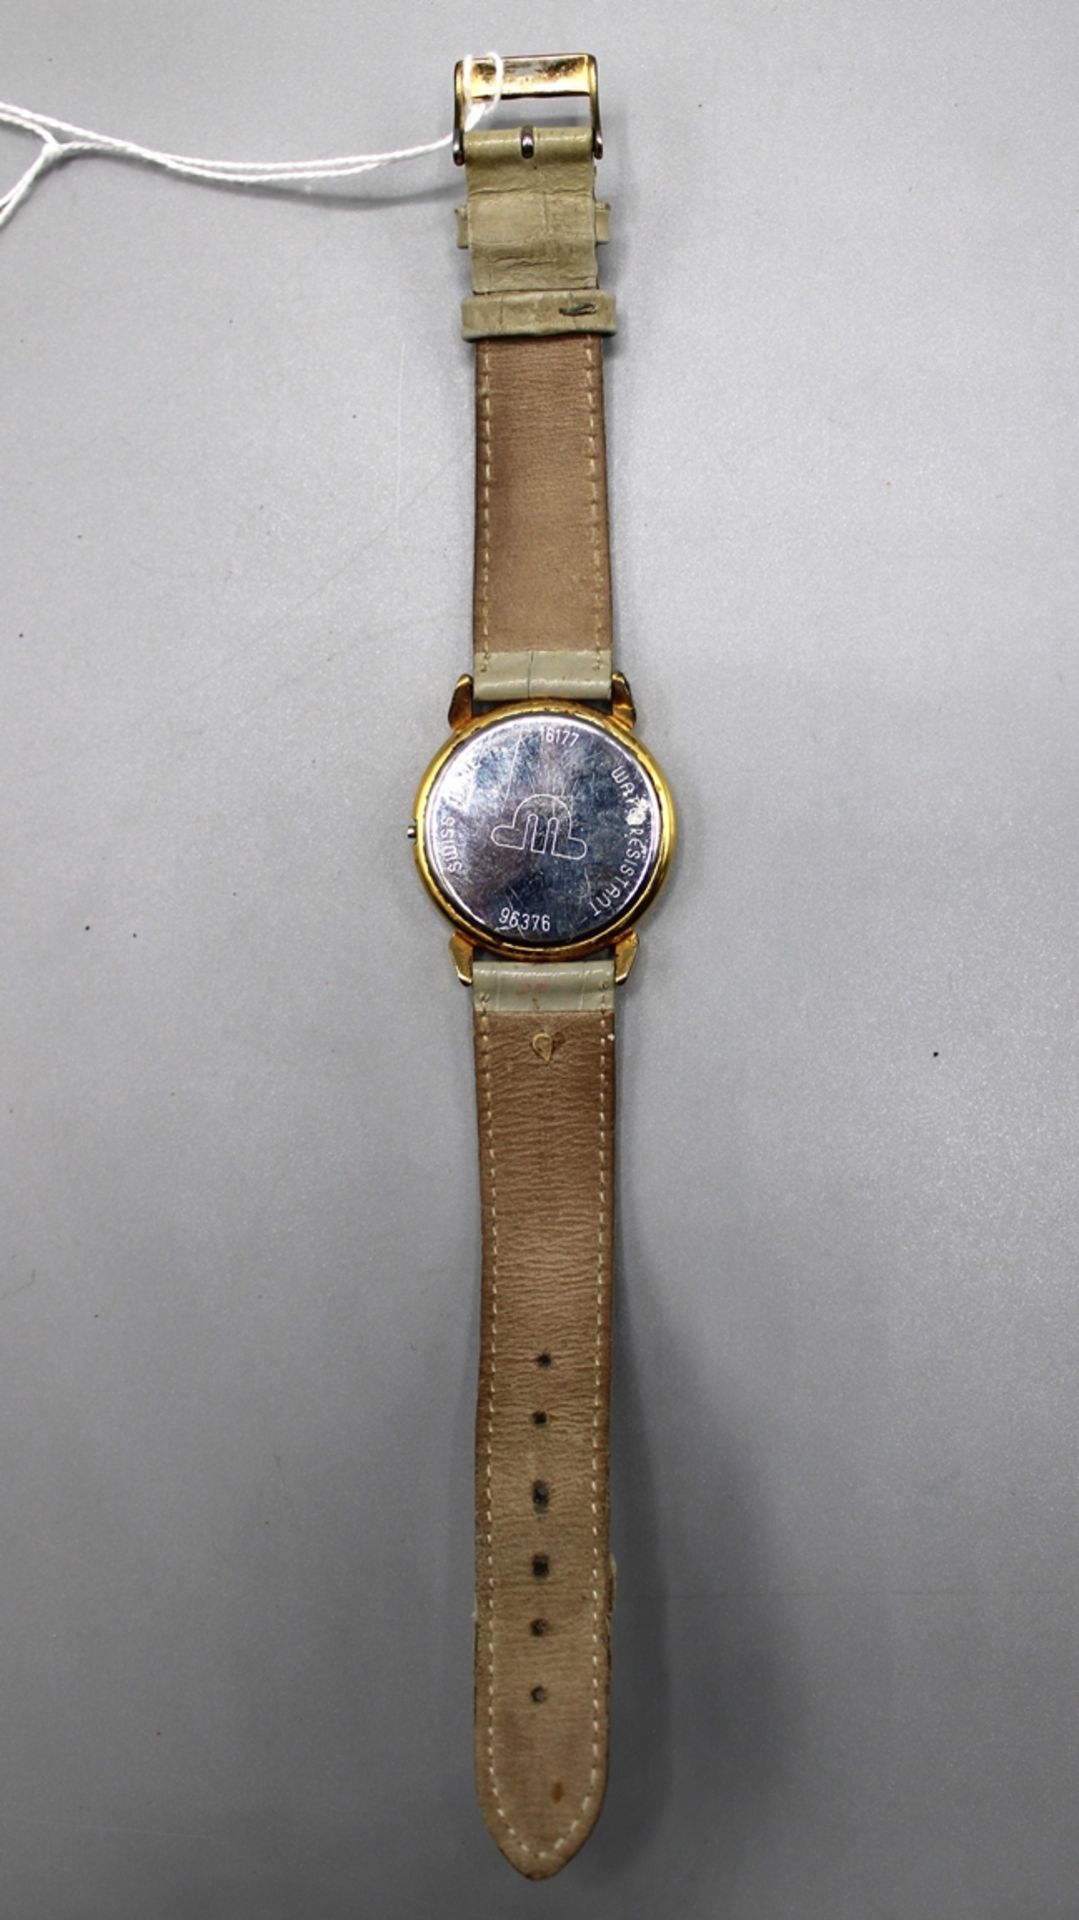 Maurice Lacroix Uhr 96376, Ø ca. 33,7 mm, ungetestet, Krone fehlt - Image 3 of 3